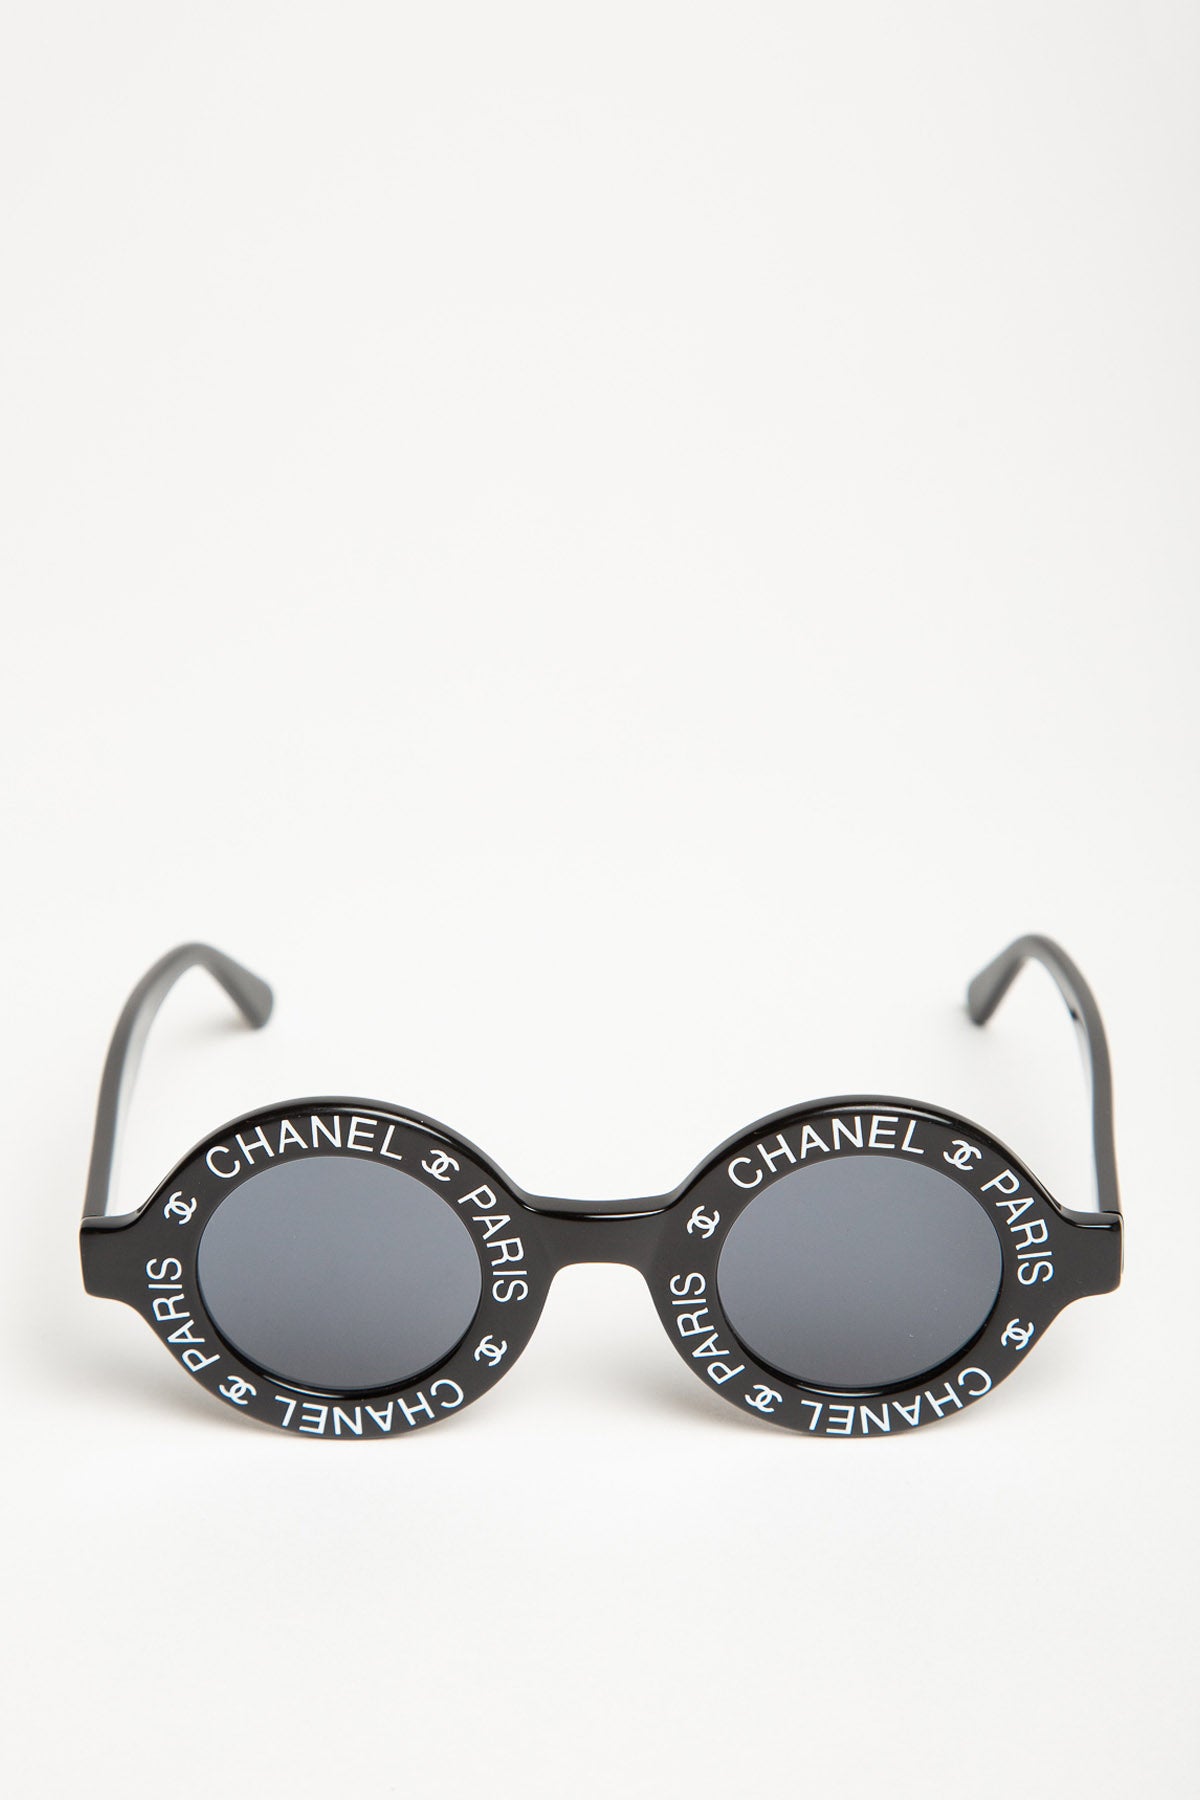 Vintage Giorgio Armani Sunglasses Round Frames